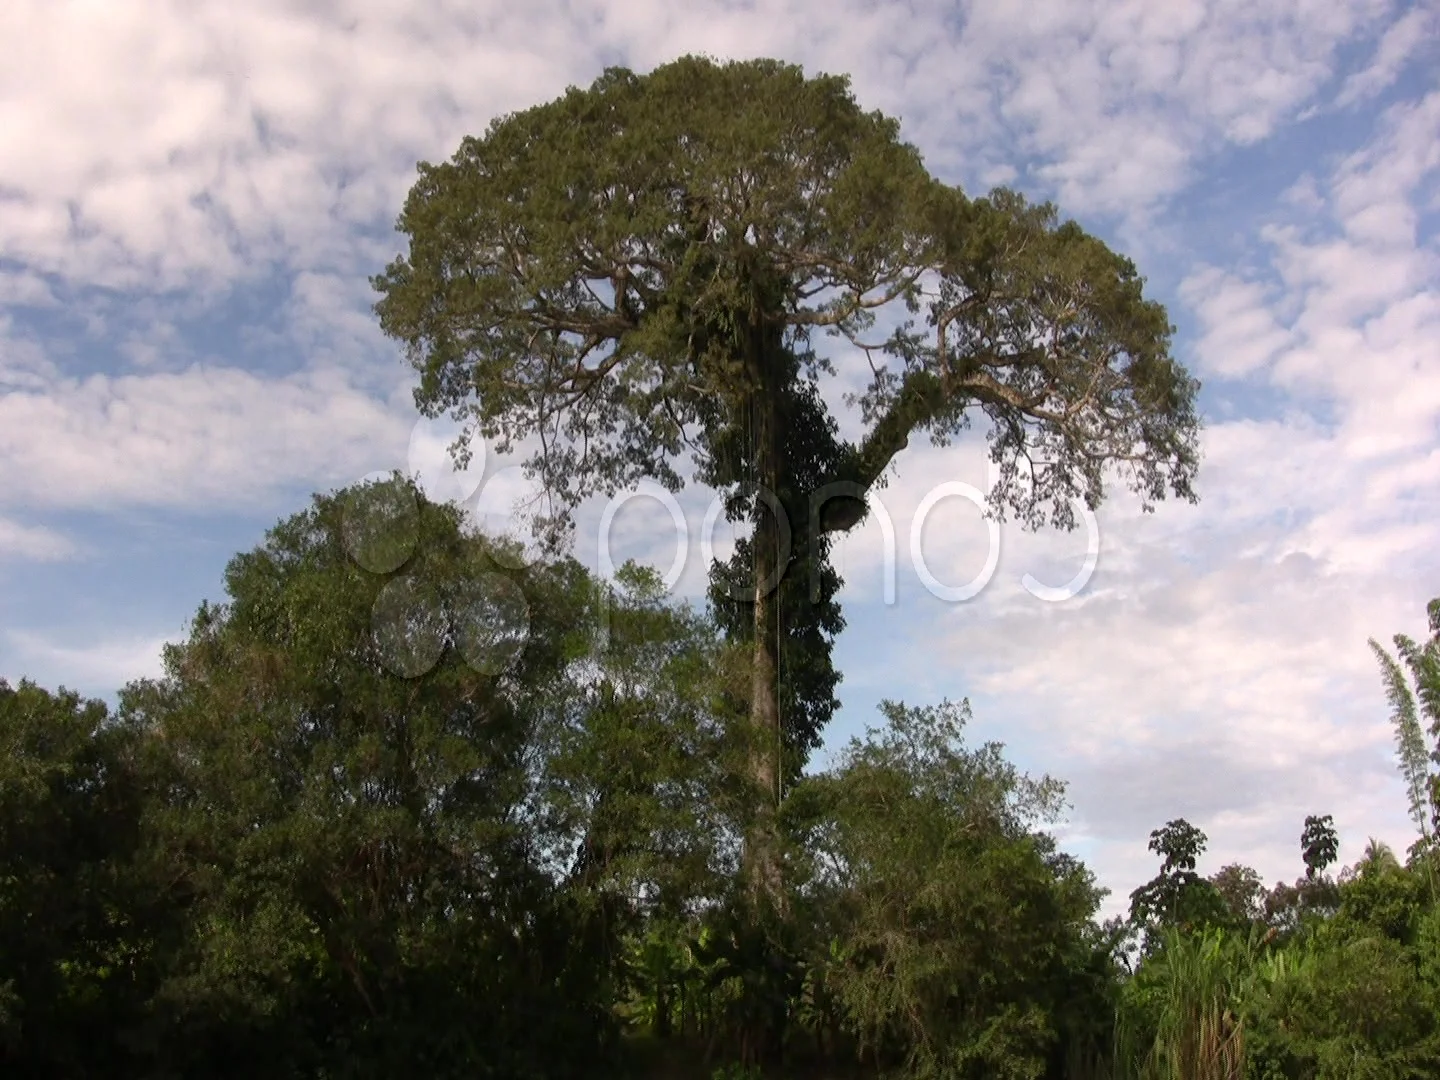 Kapok tree - Ceiba pentandra